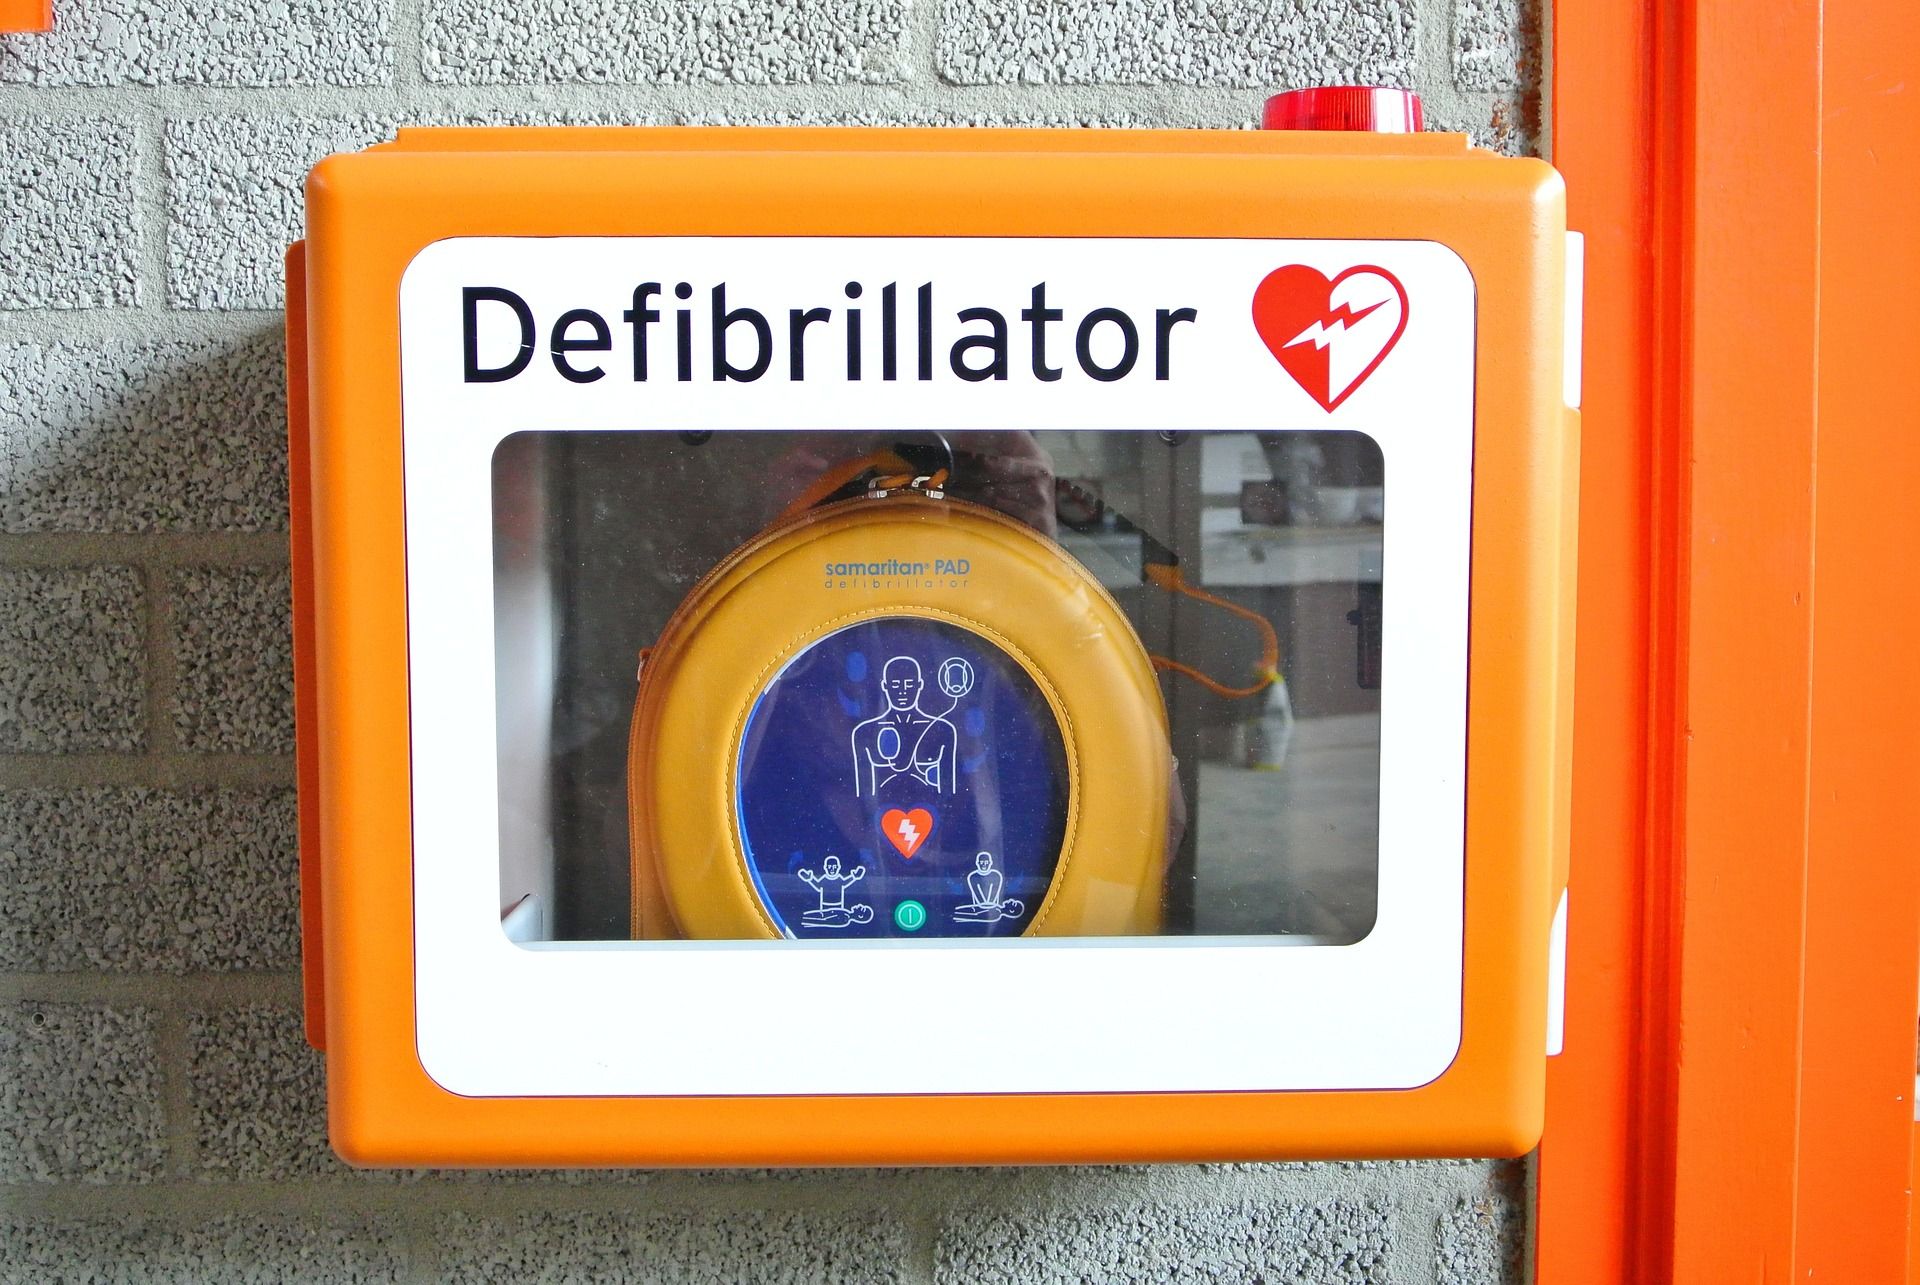 defibrillator-g74c7541a6_1920